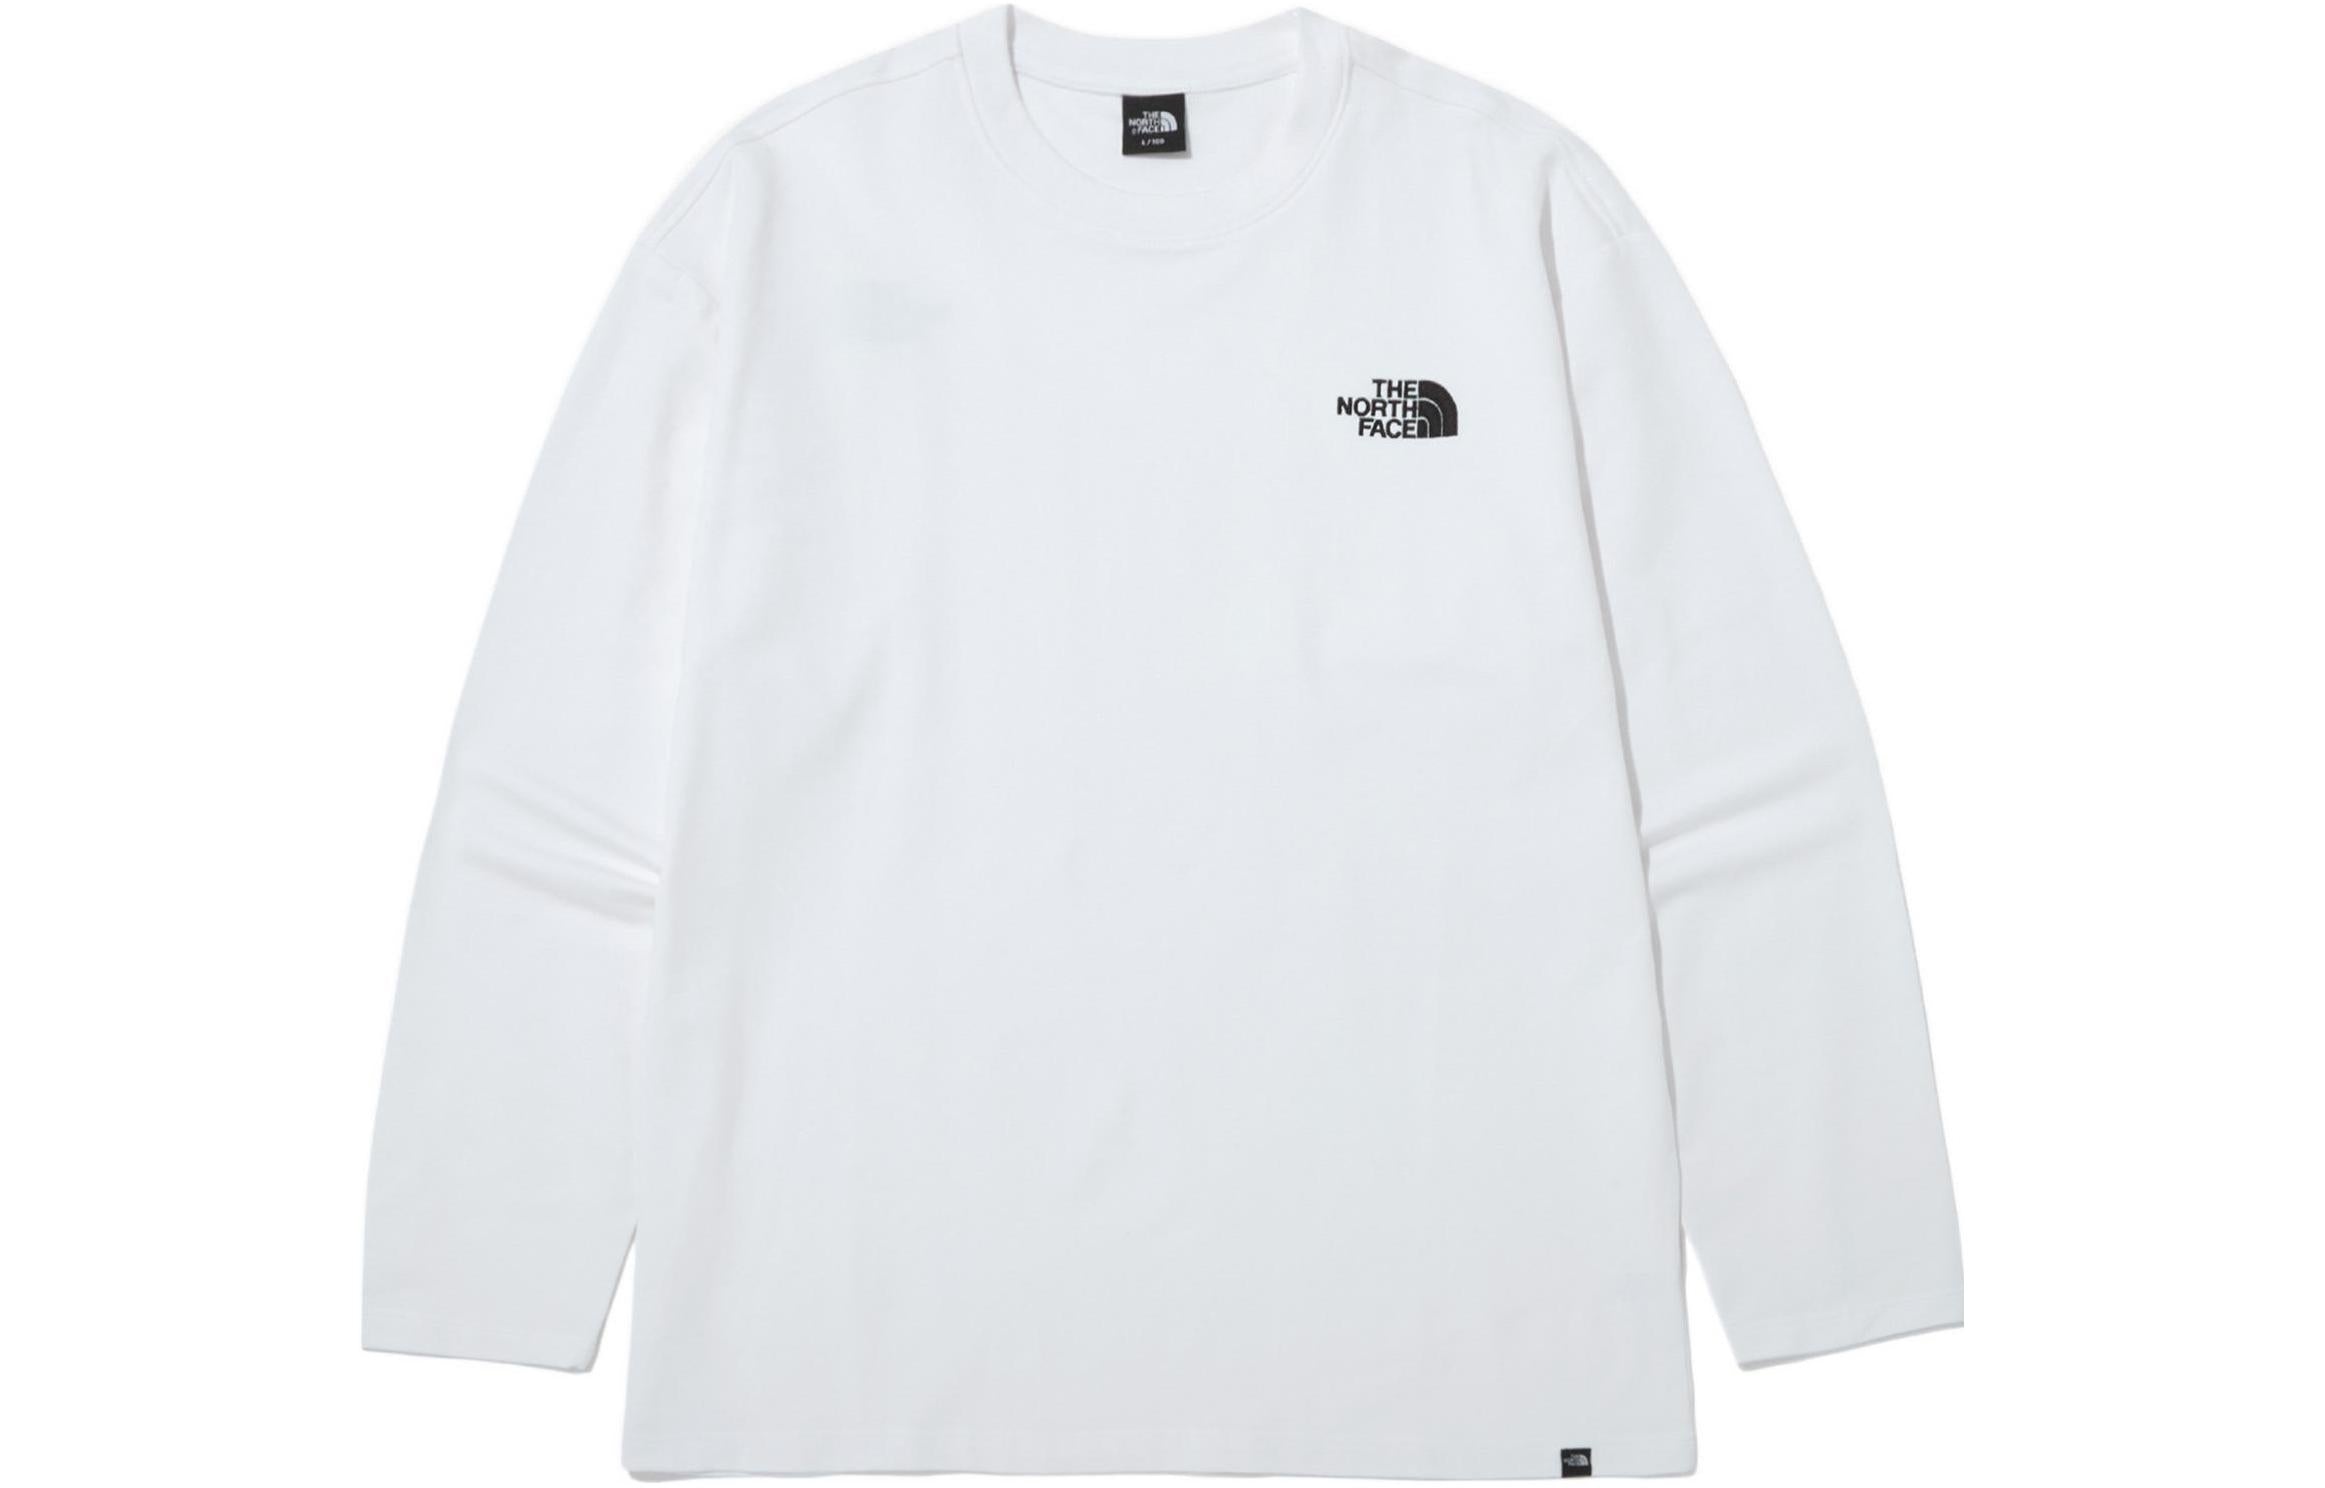 THE NORTH FACE Long Sleeve T-Shirt 'White' NT7TN90B - 2